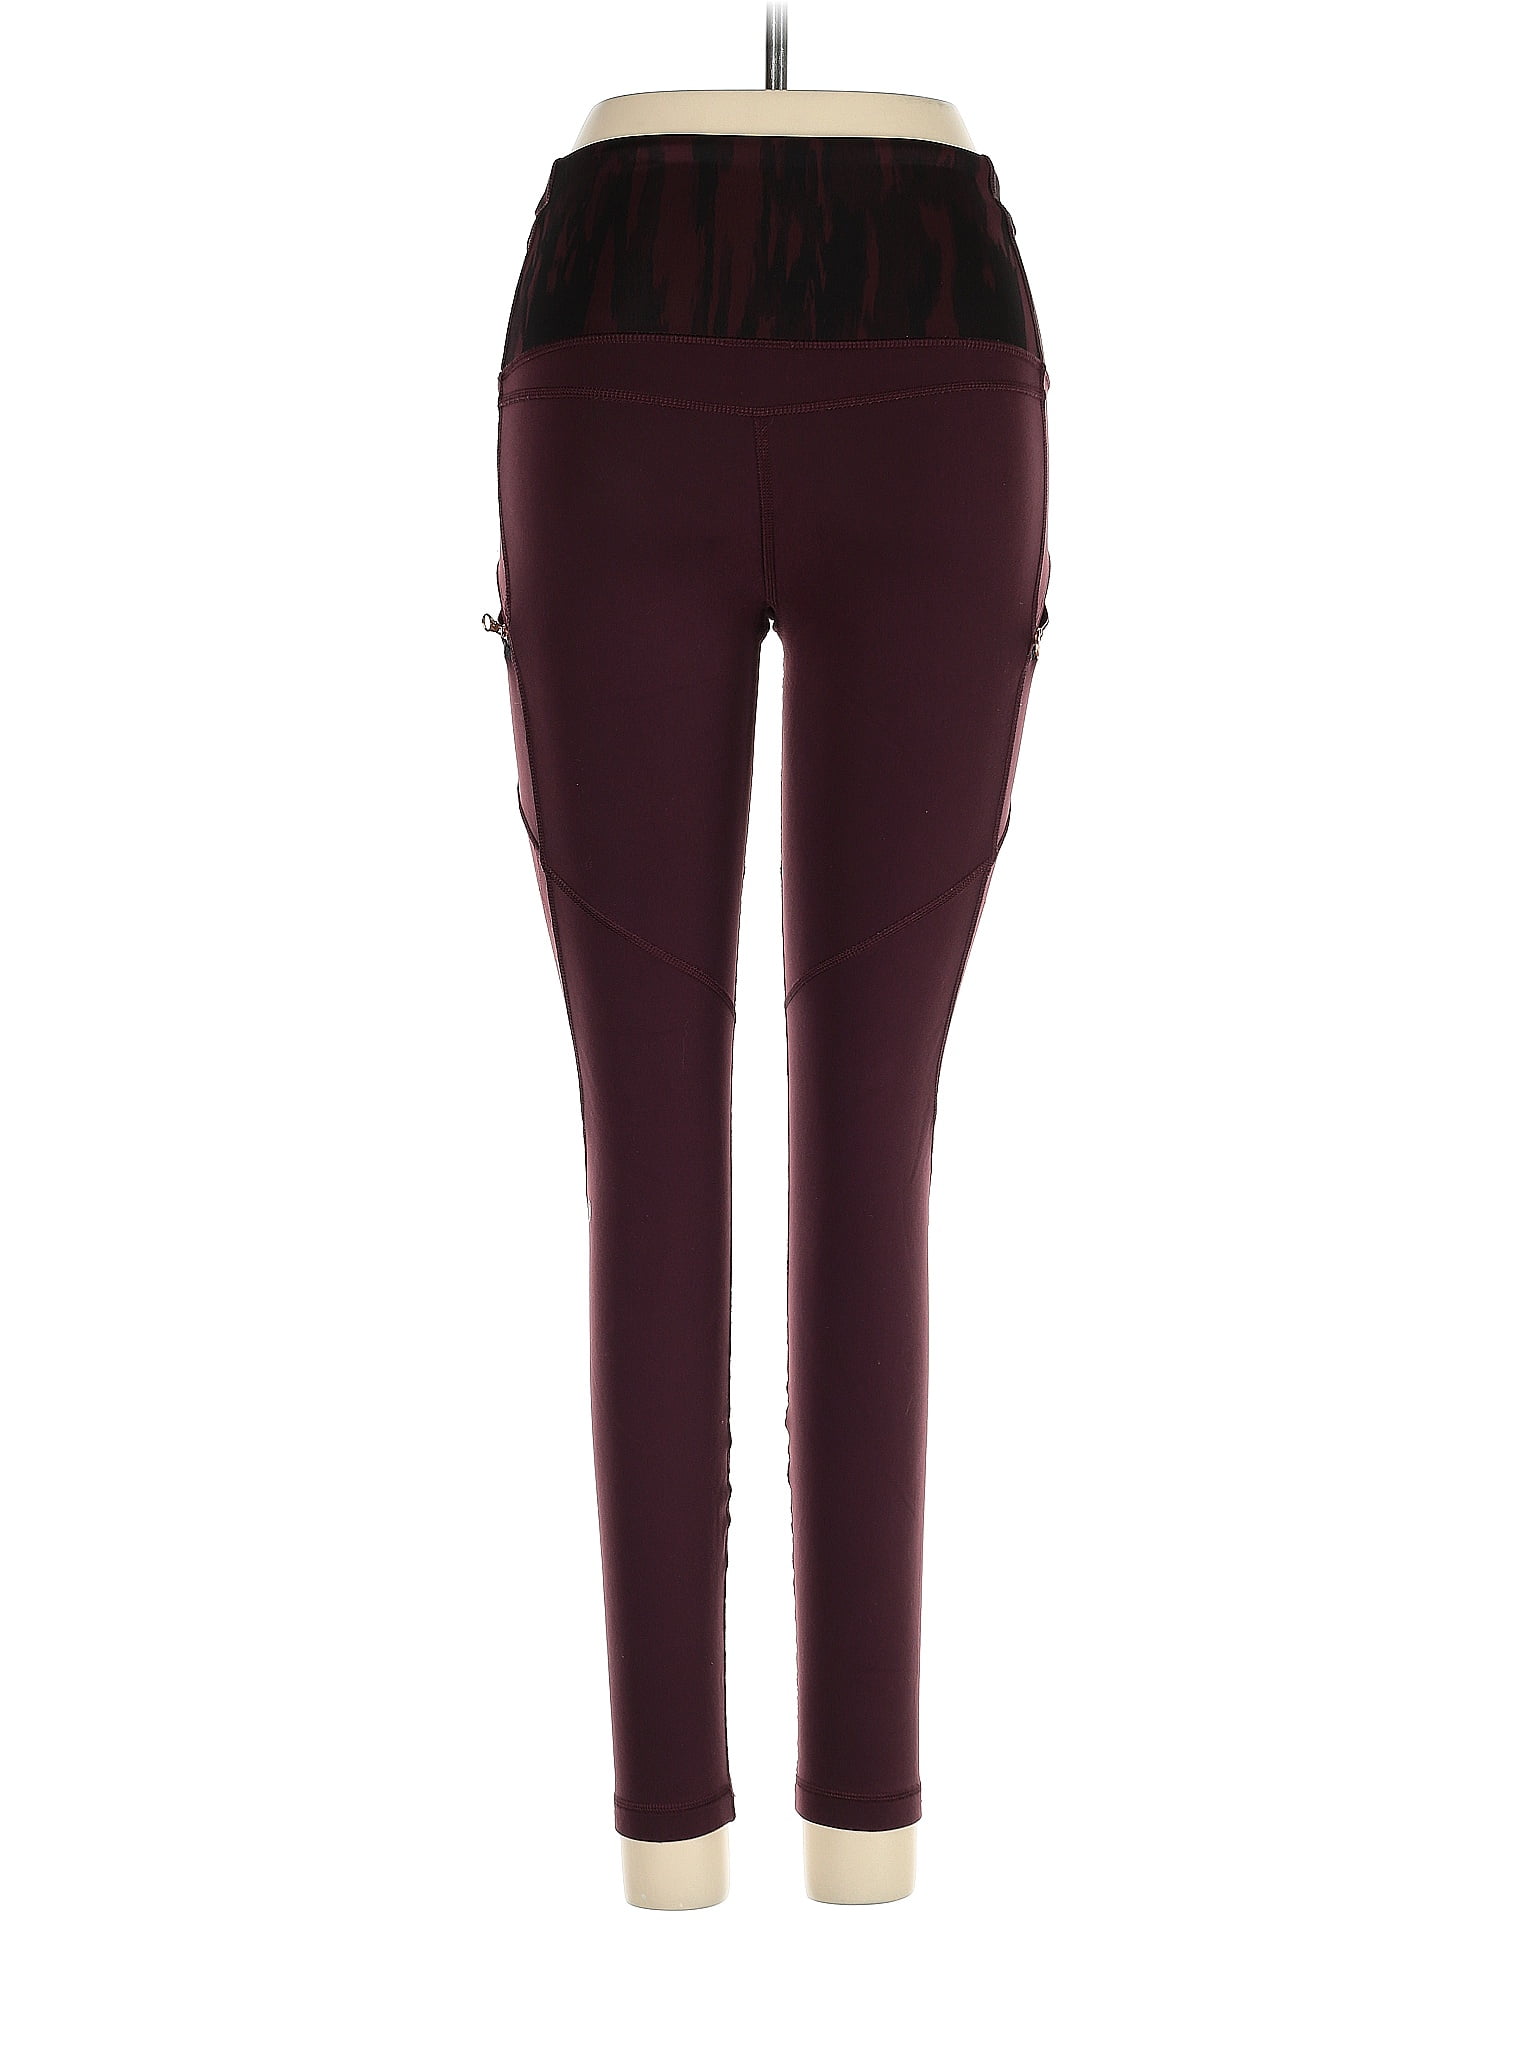 Lululemon Athletica Maroon Burgundy Active Pants Size XL - 43% off